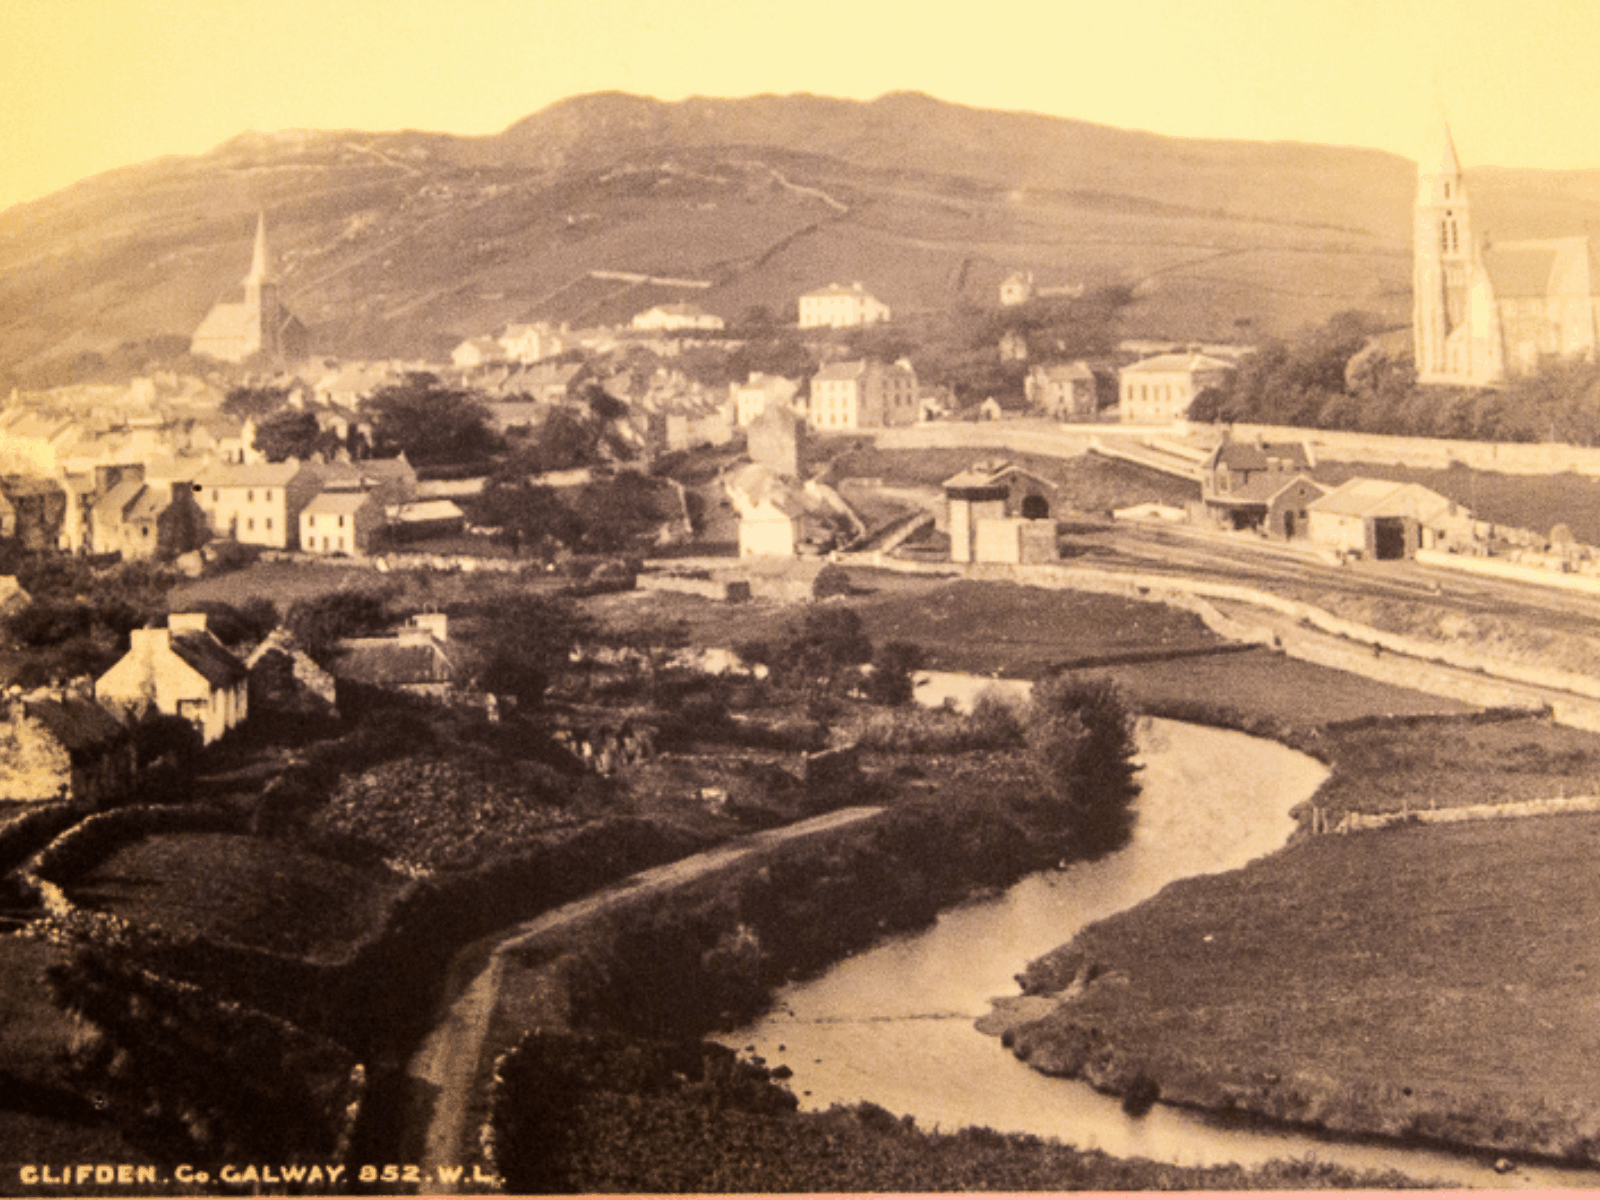 Clifden Ireland as seen in the 1800s